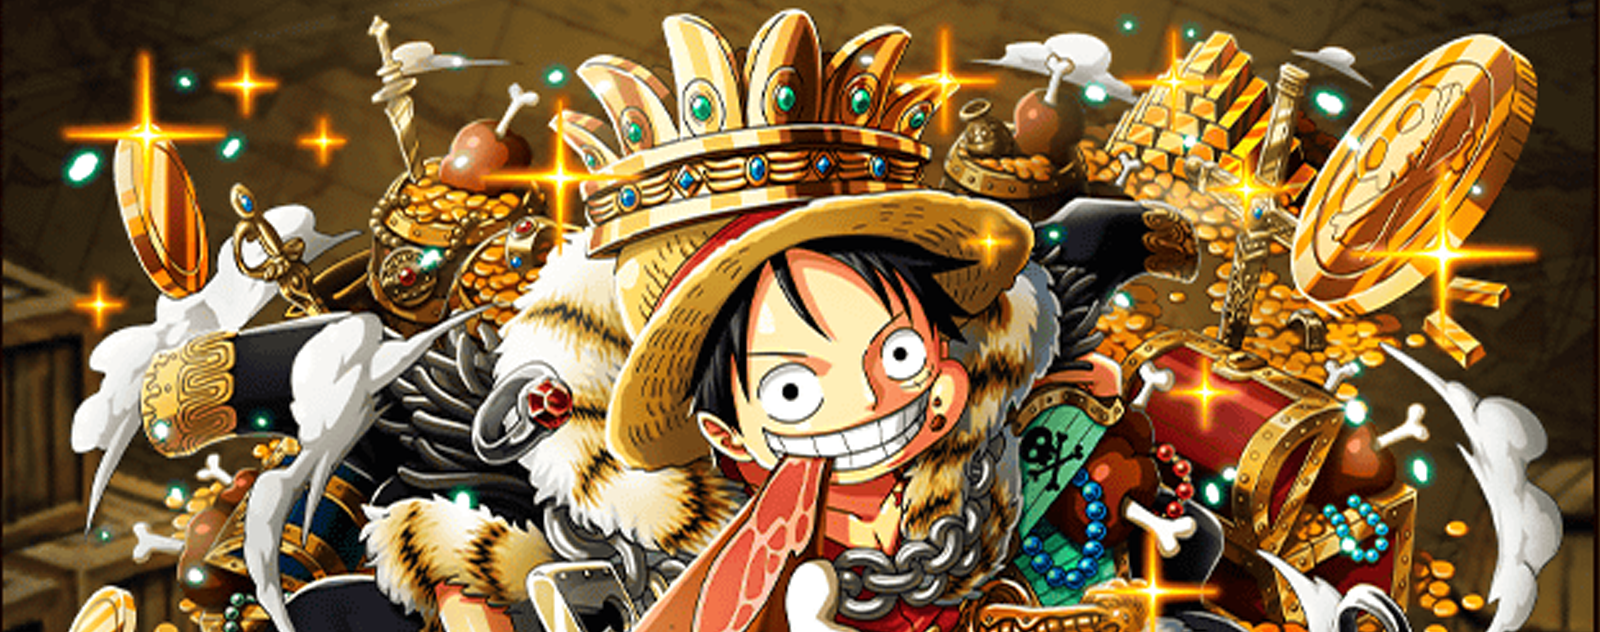 Trousse One Piece Futur Roi des Pirate